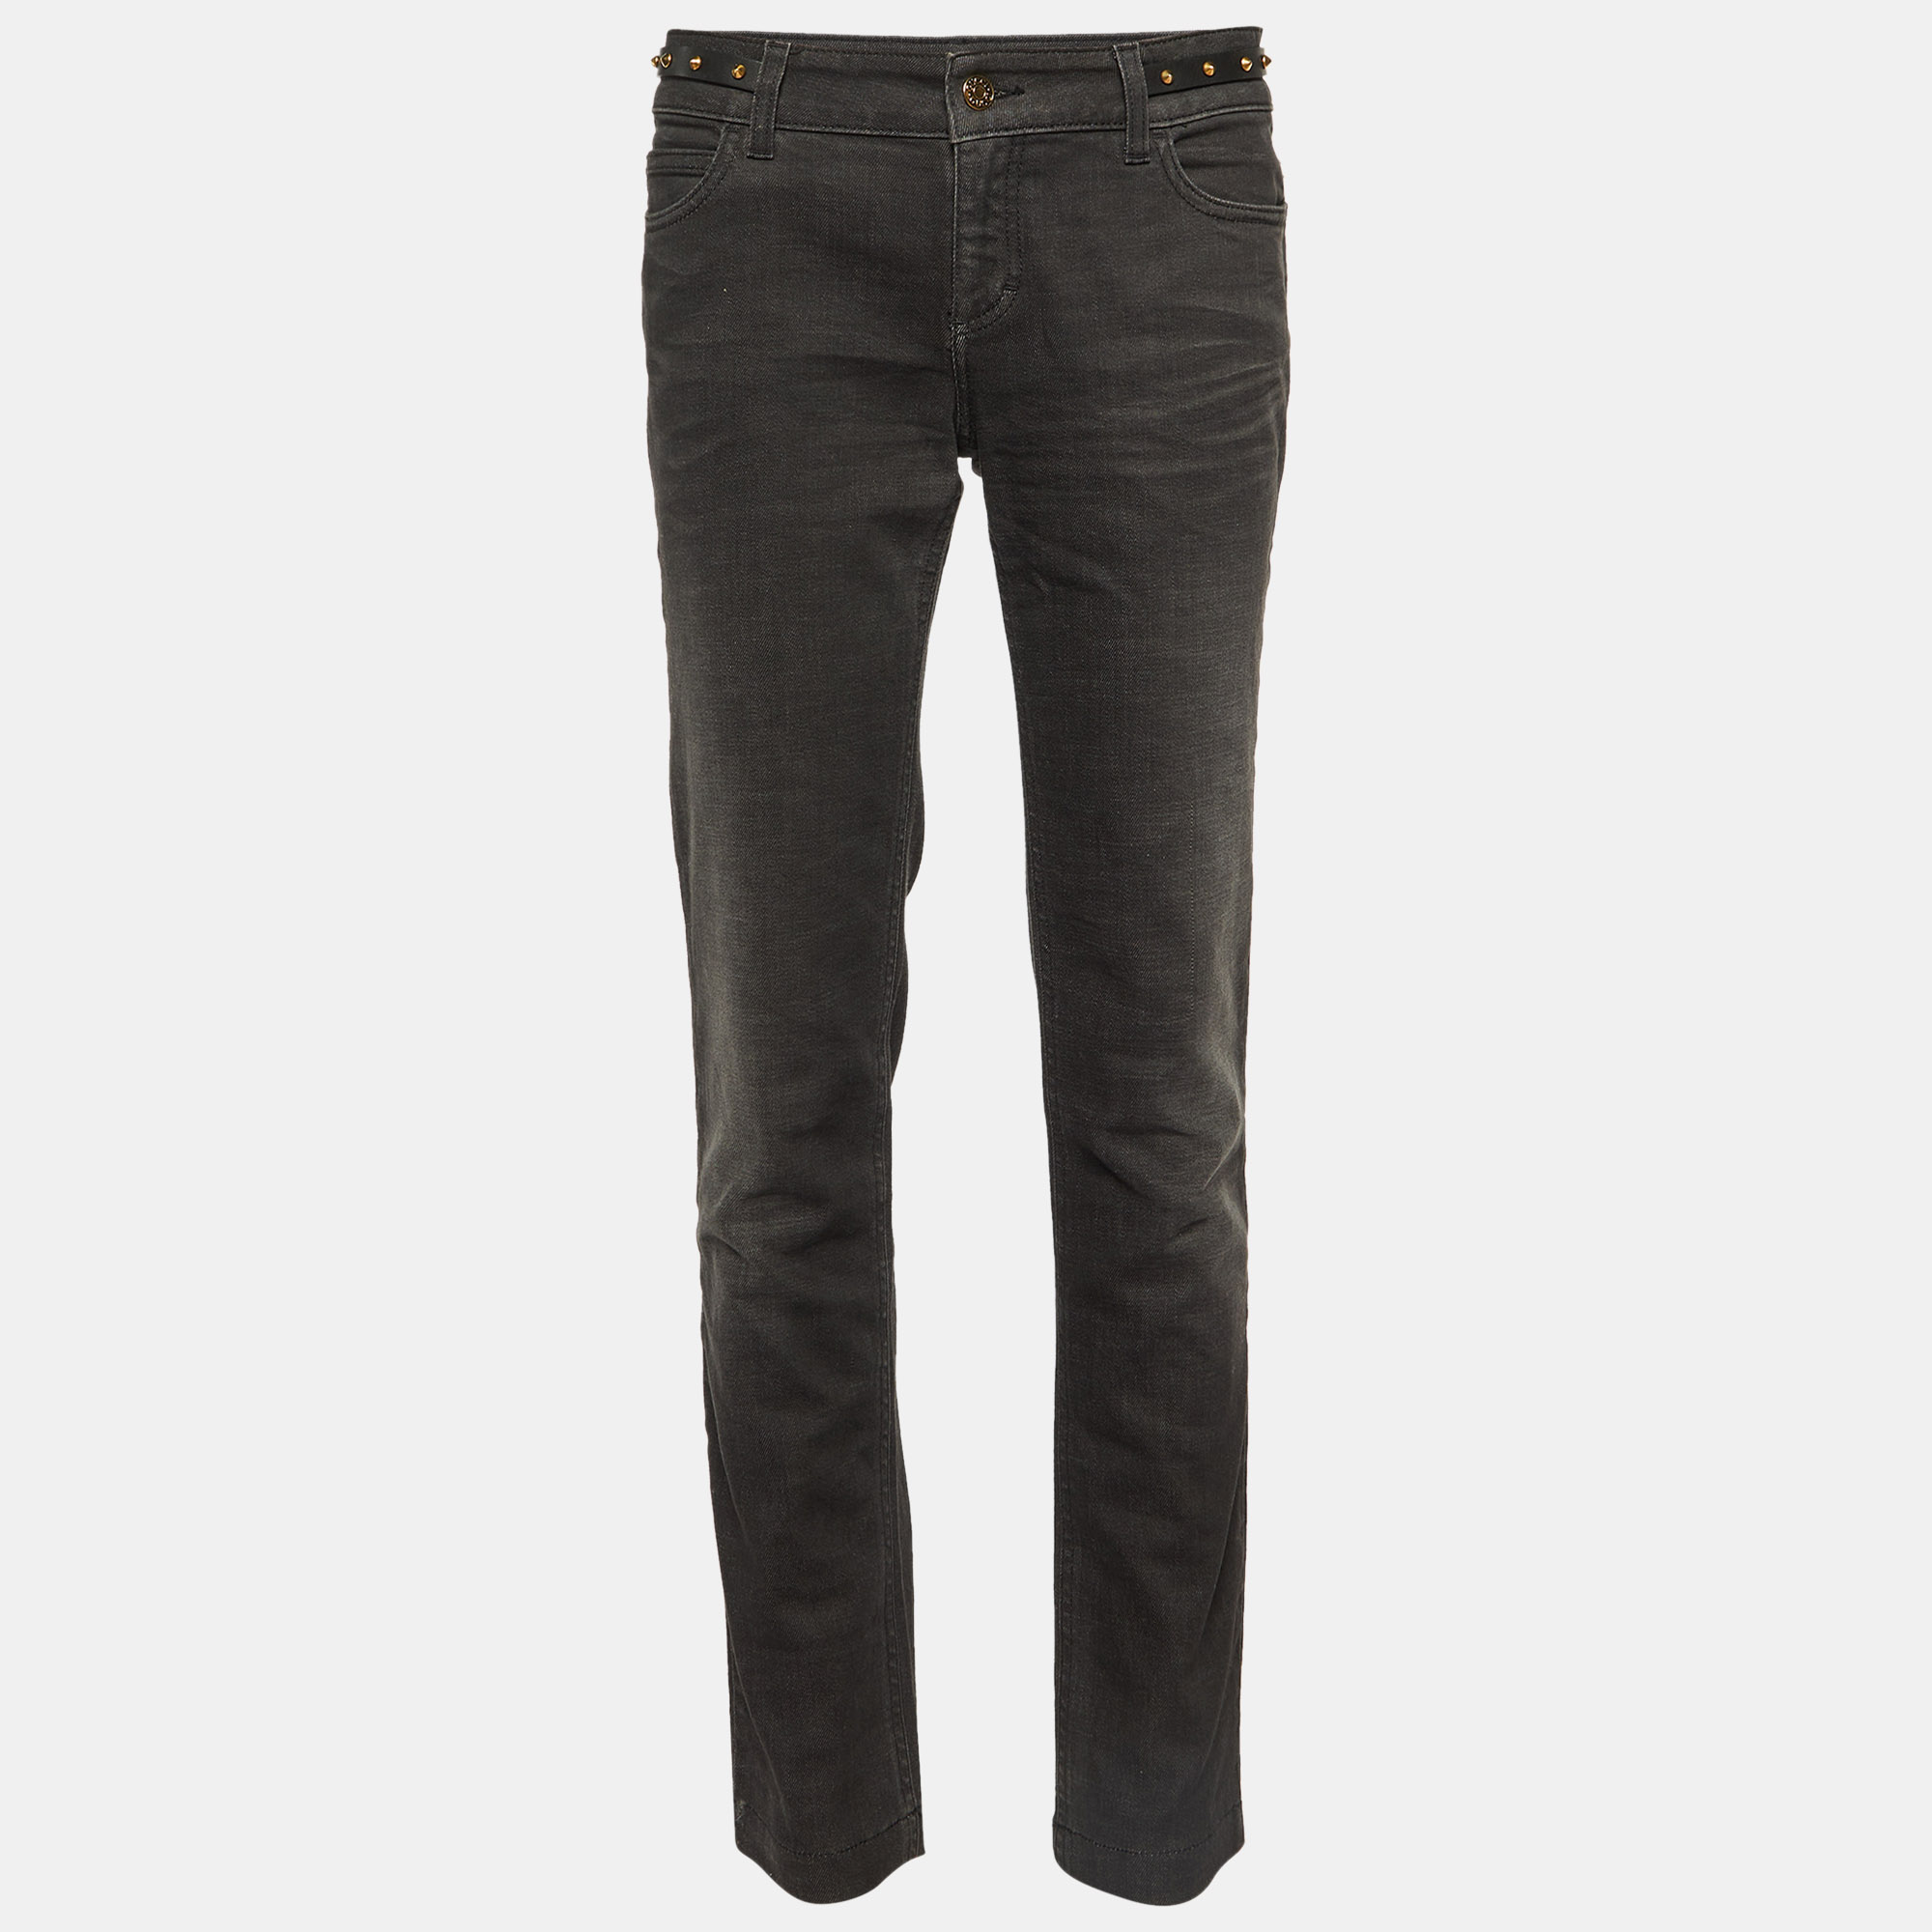 Gucci black washed denim legging jeans s/waist 31"